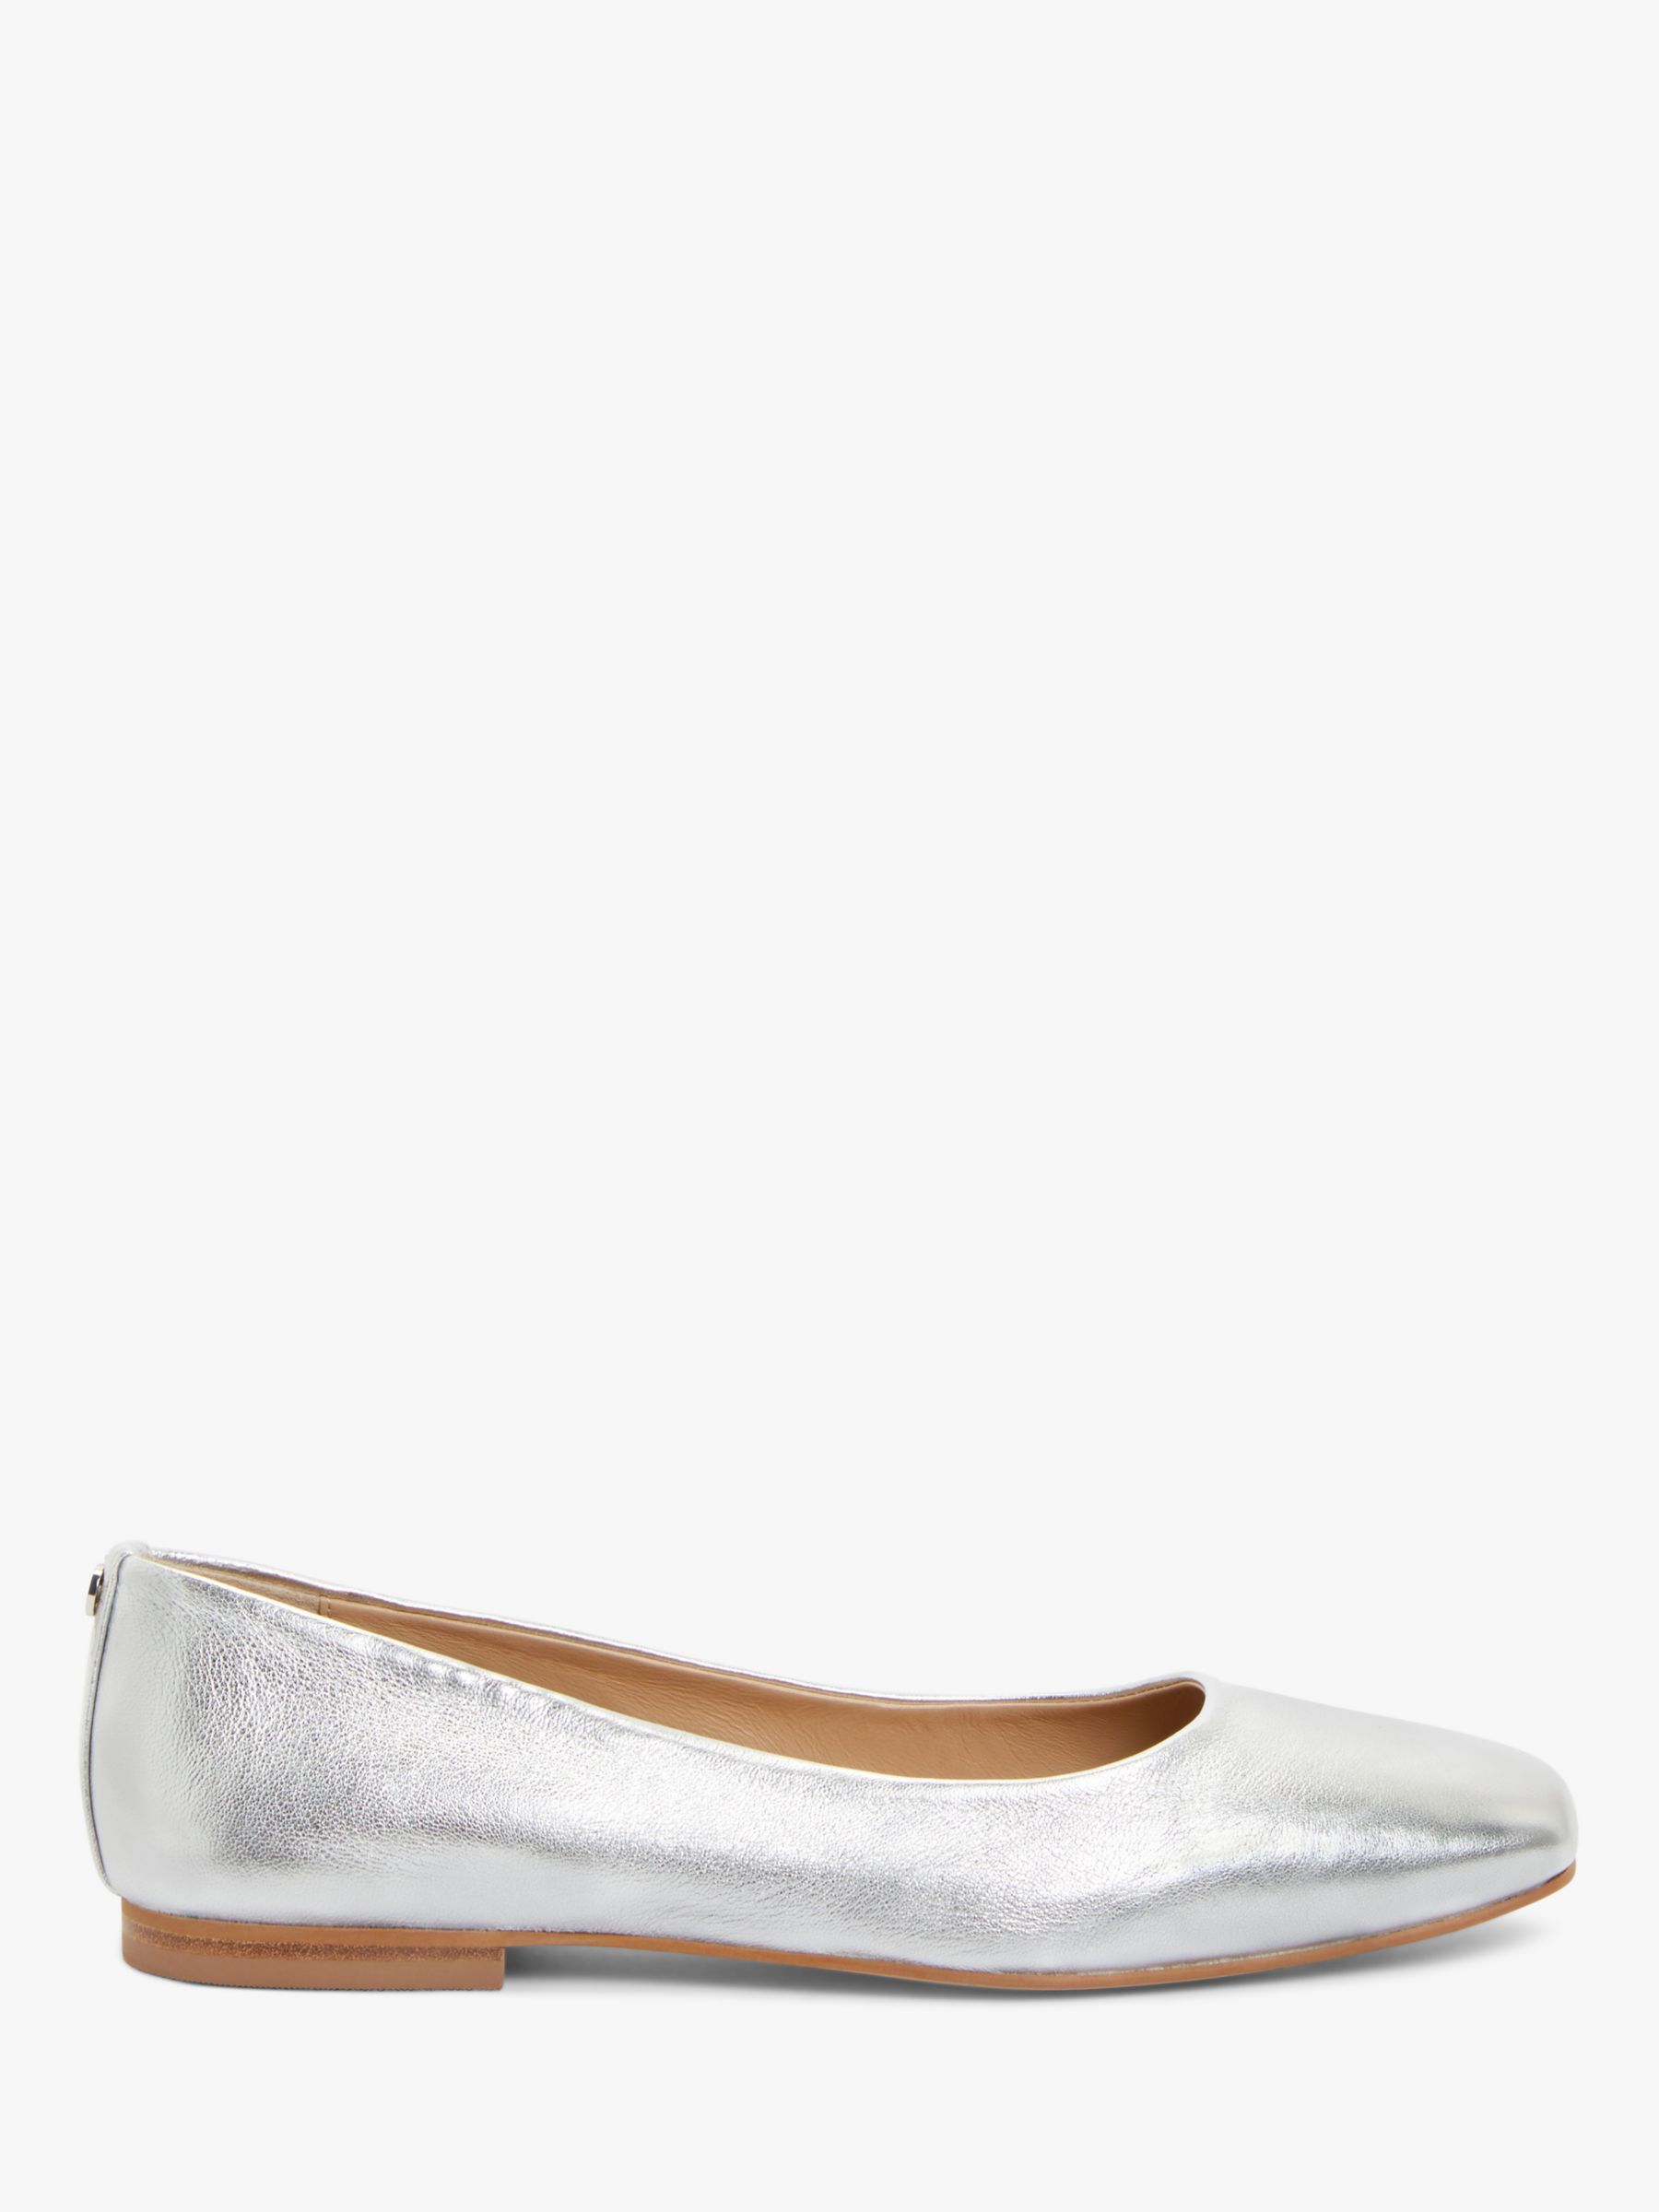 Women's Shoes - Flat Heel, Silver | John Lewis & Partners